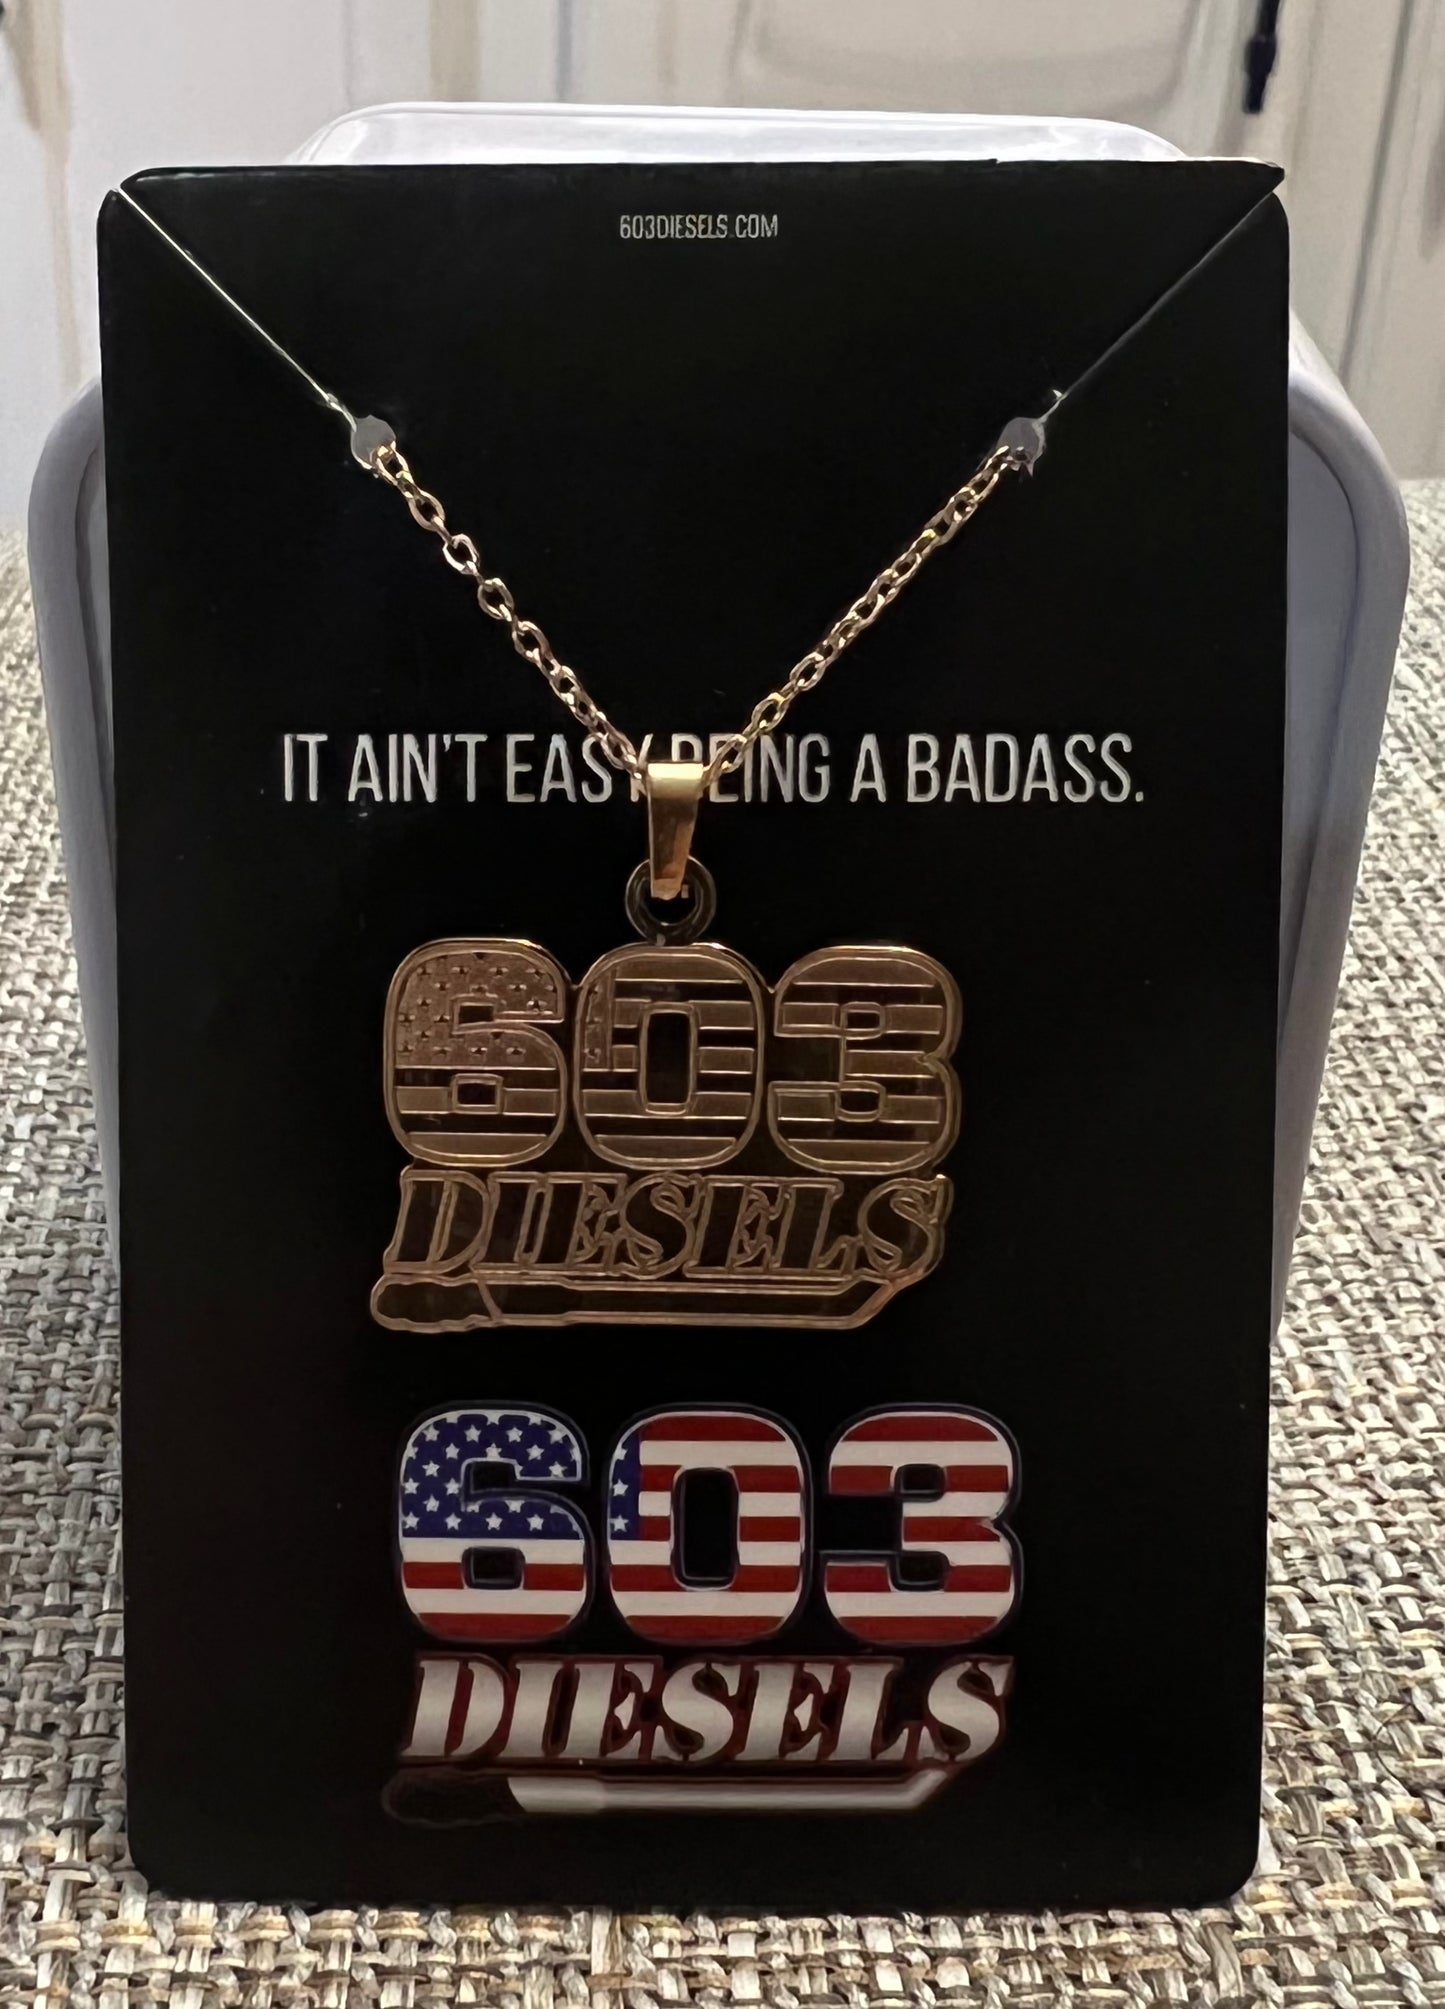 603 Diesels Logo Necklace